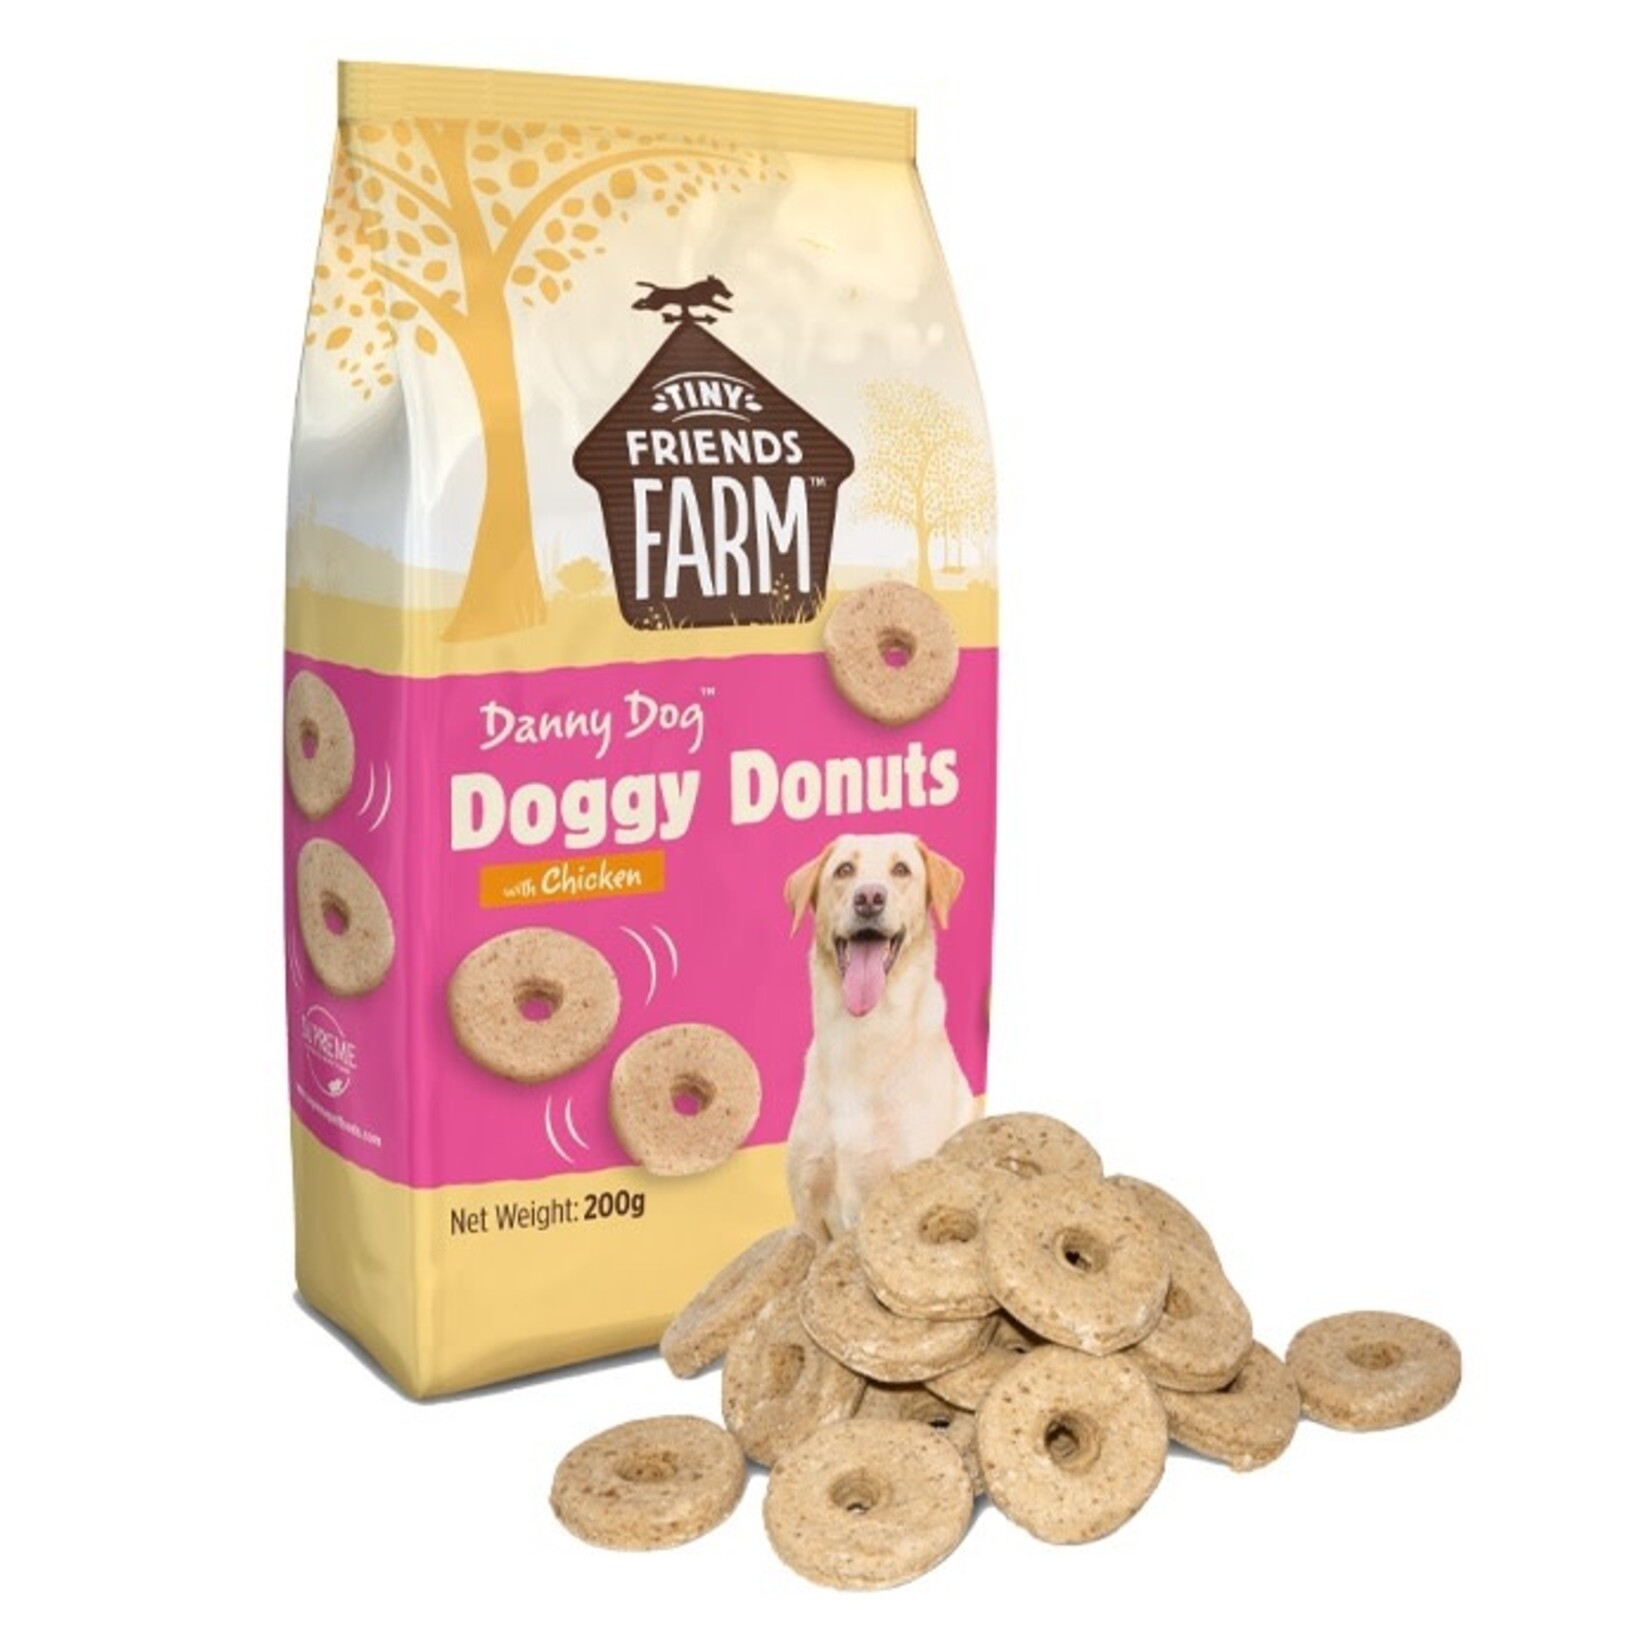 Supreme Tiny Friends Farm Danny Dog Doggy Donuts Chicken Treats, 200g